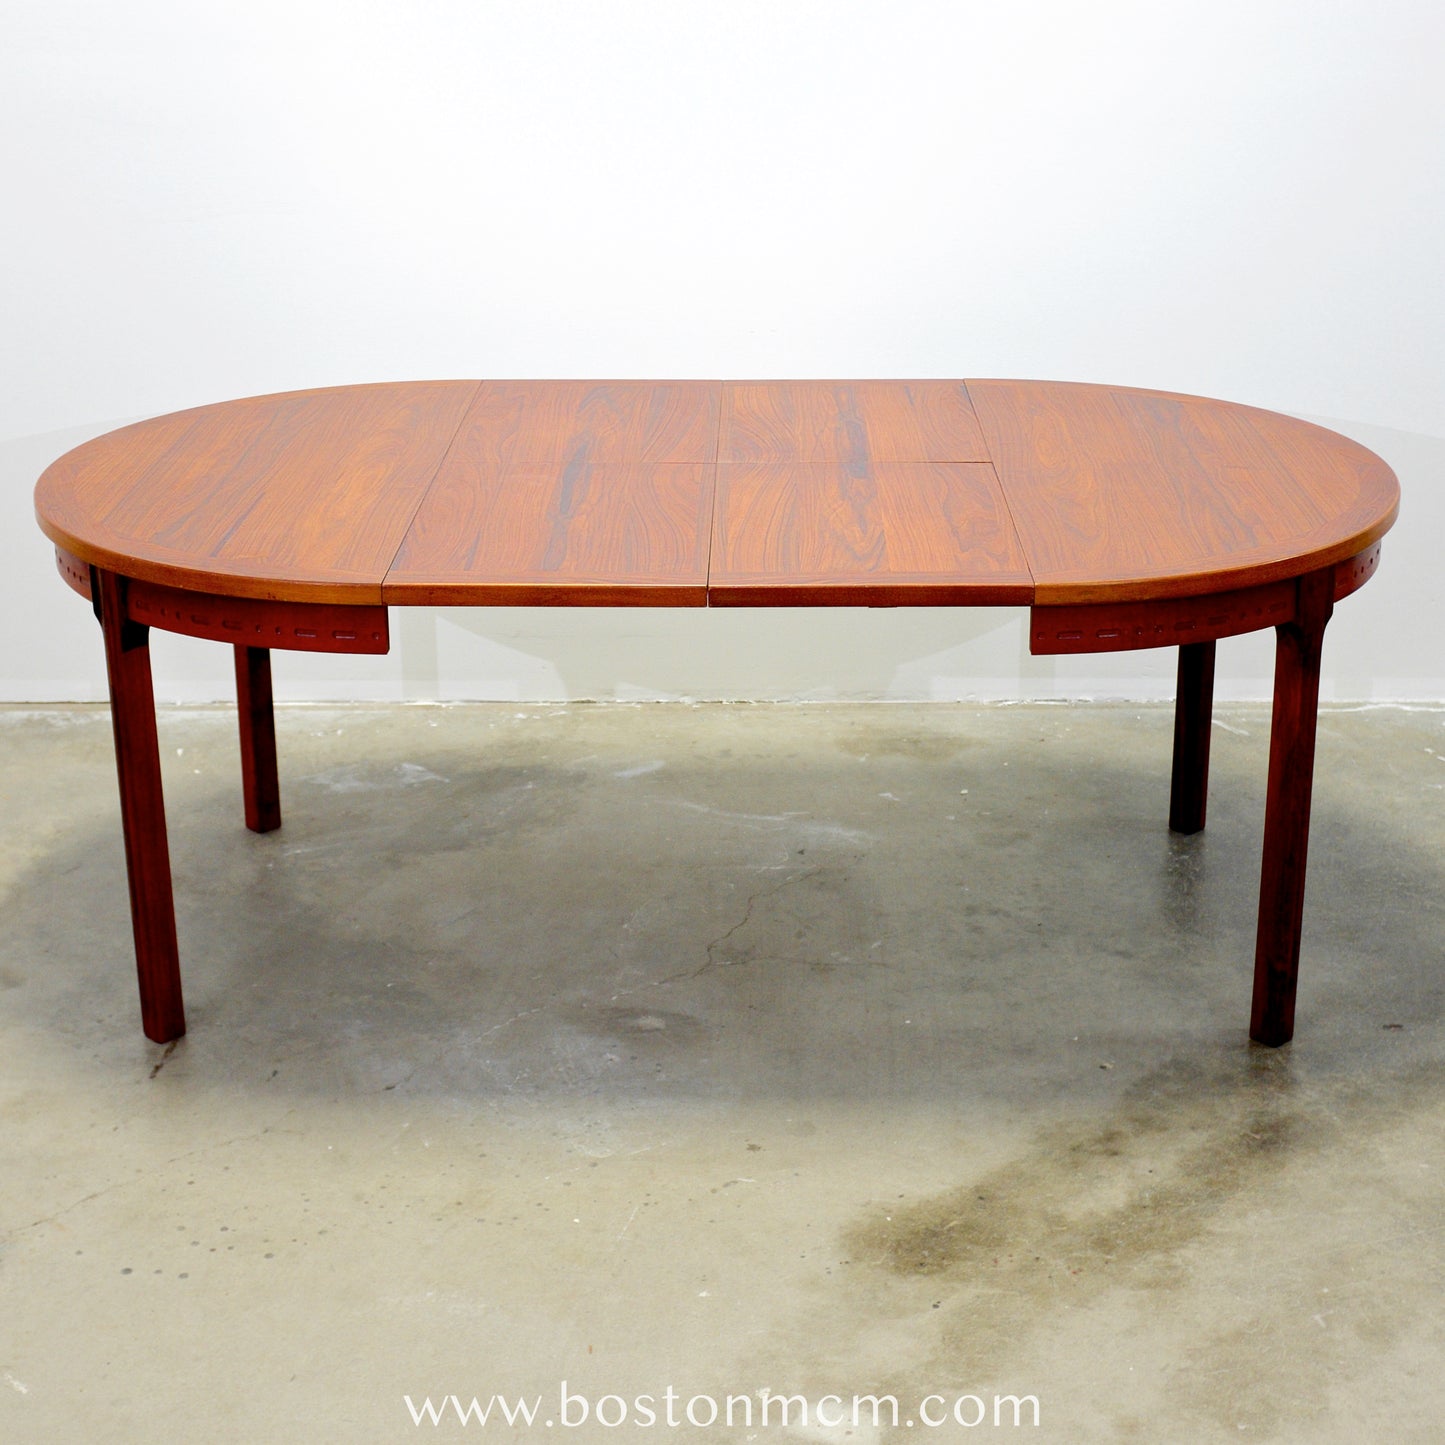 Troeds Bjärnum Rosewood  "Rimbo" Dining Table Designed by Leif & Bengt Troedsson